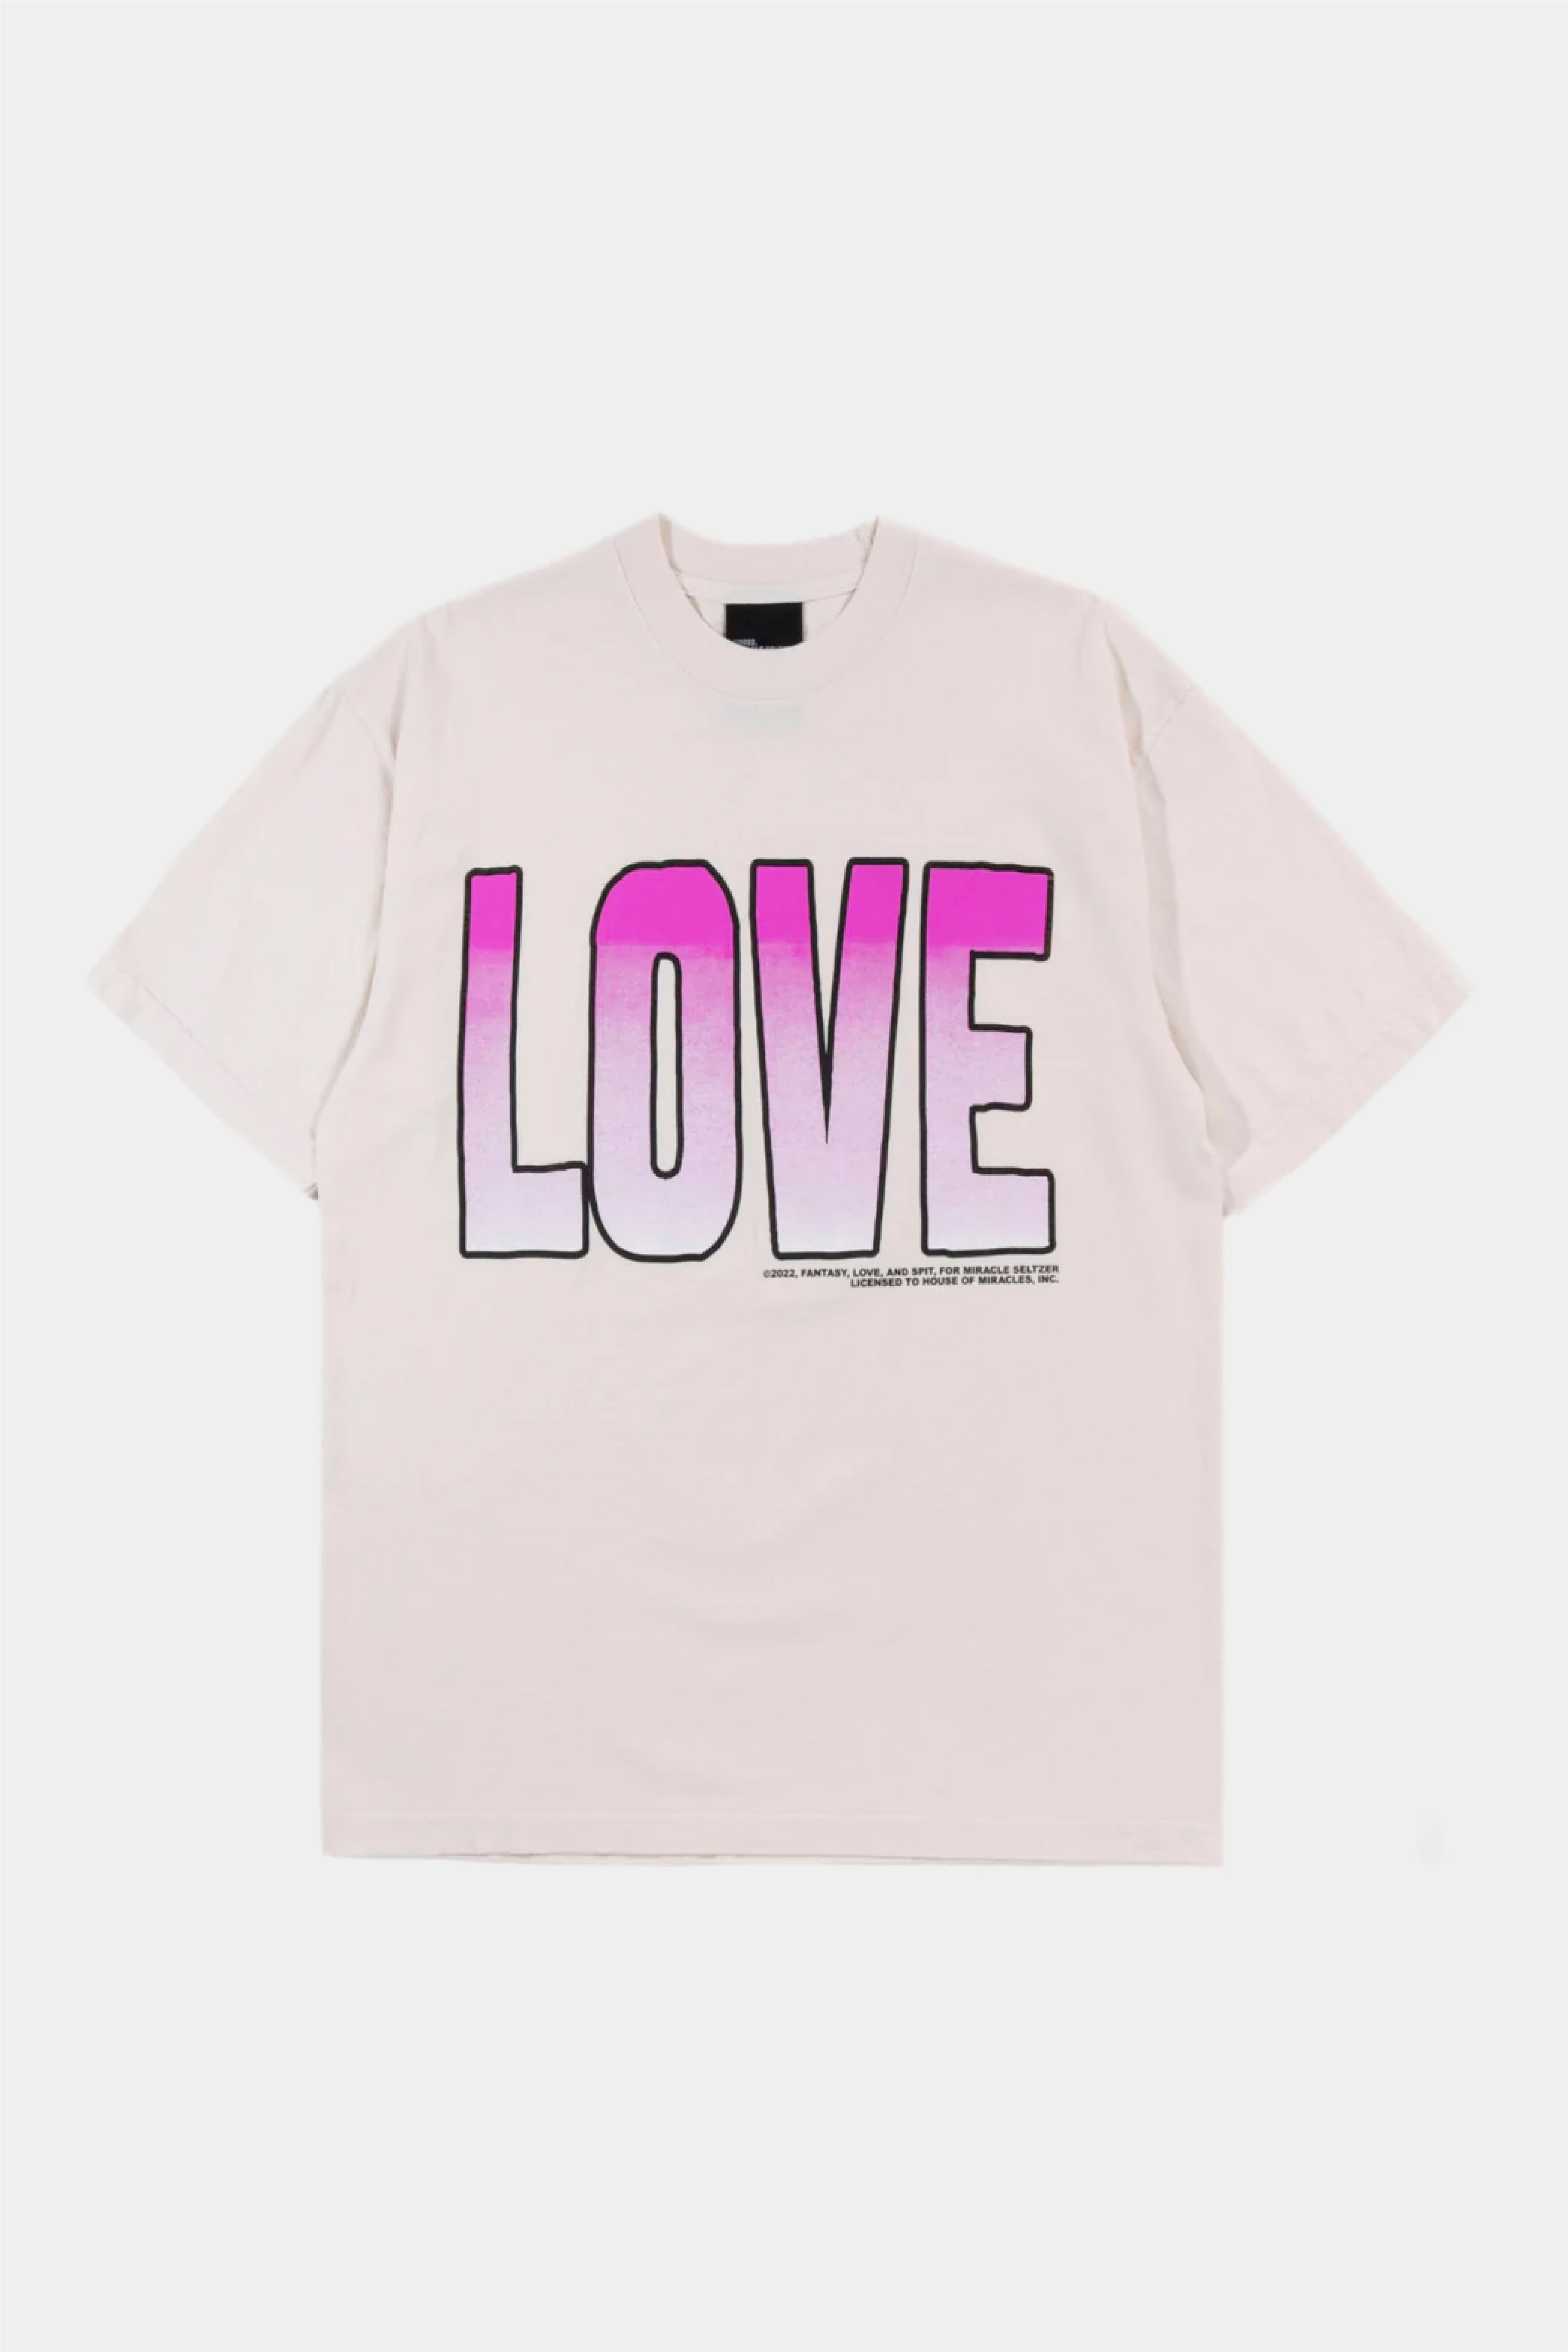 Selectshop FRAME - MIRACLE SELTZER Love Tee T-Shirts Concept Store Dubai